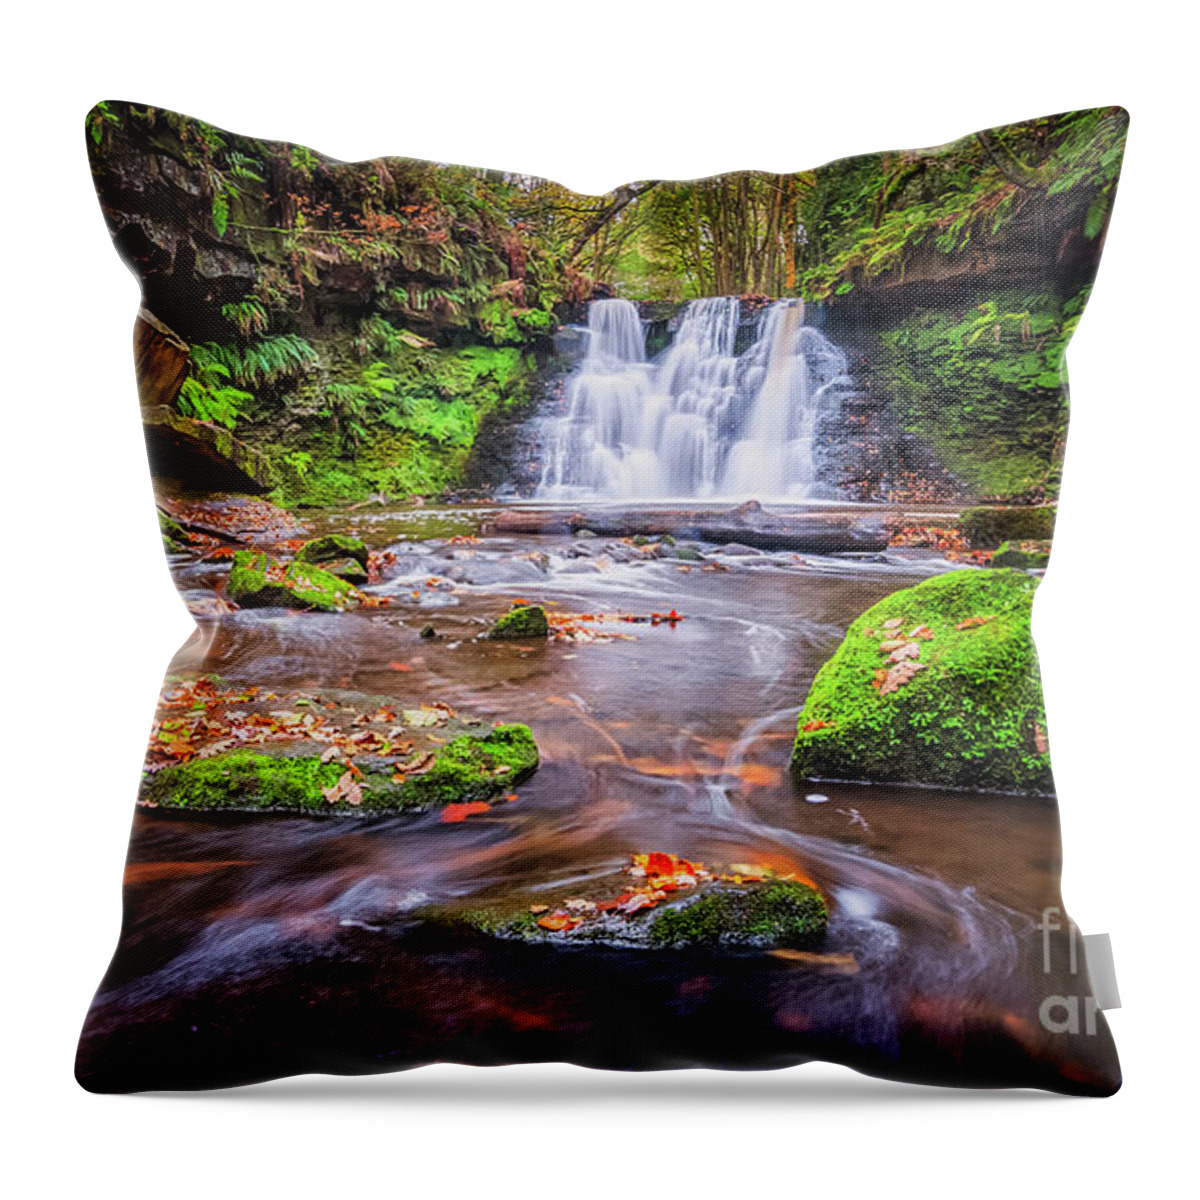 Waterfall Throw Pillow featuring the photograph Goit Stock Waterfall #10 by Mariusz Talarek